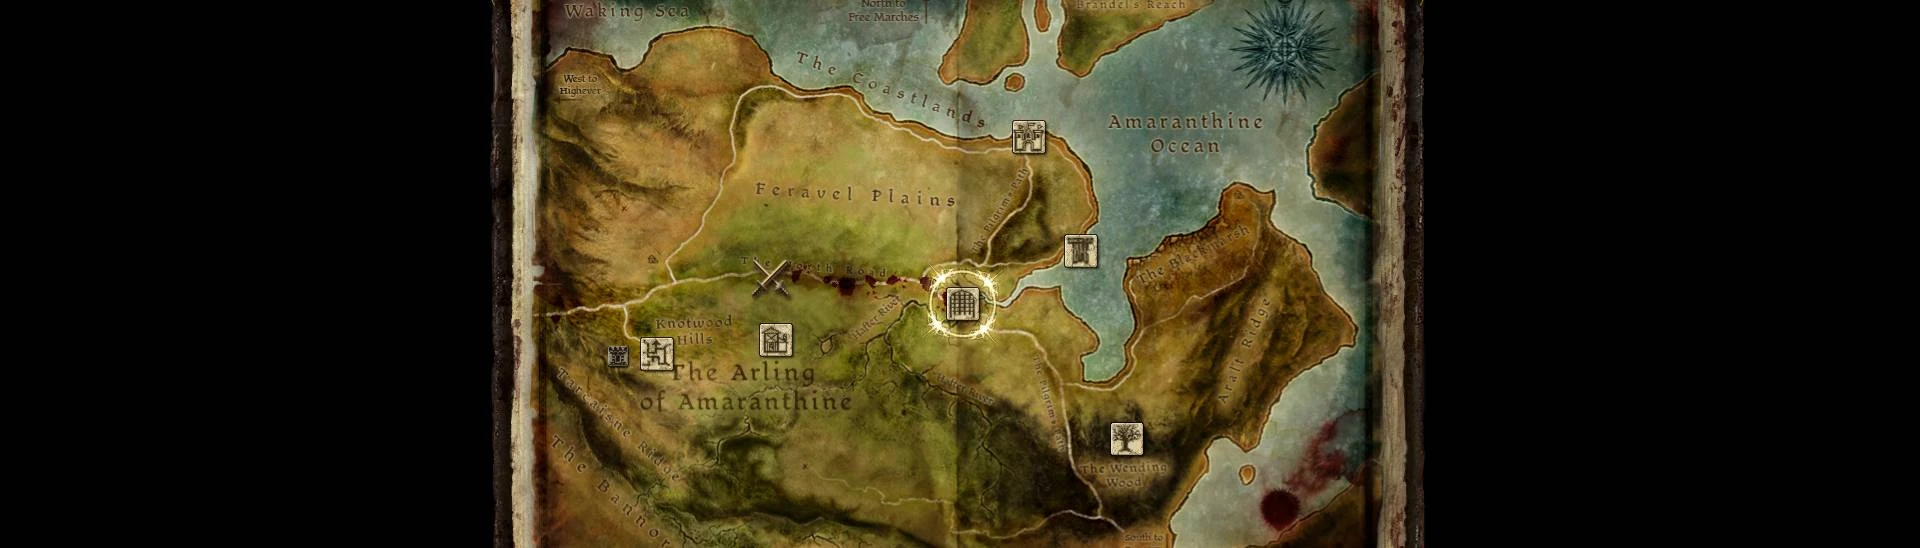 Dragon Age: Origins Check-In Week 4